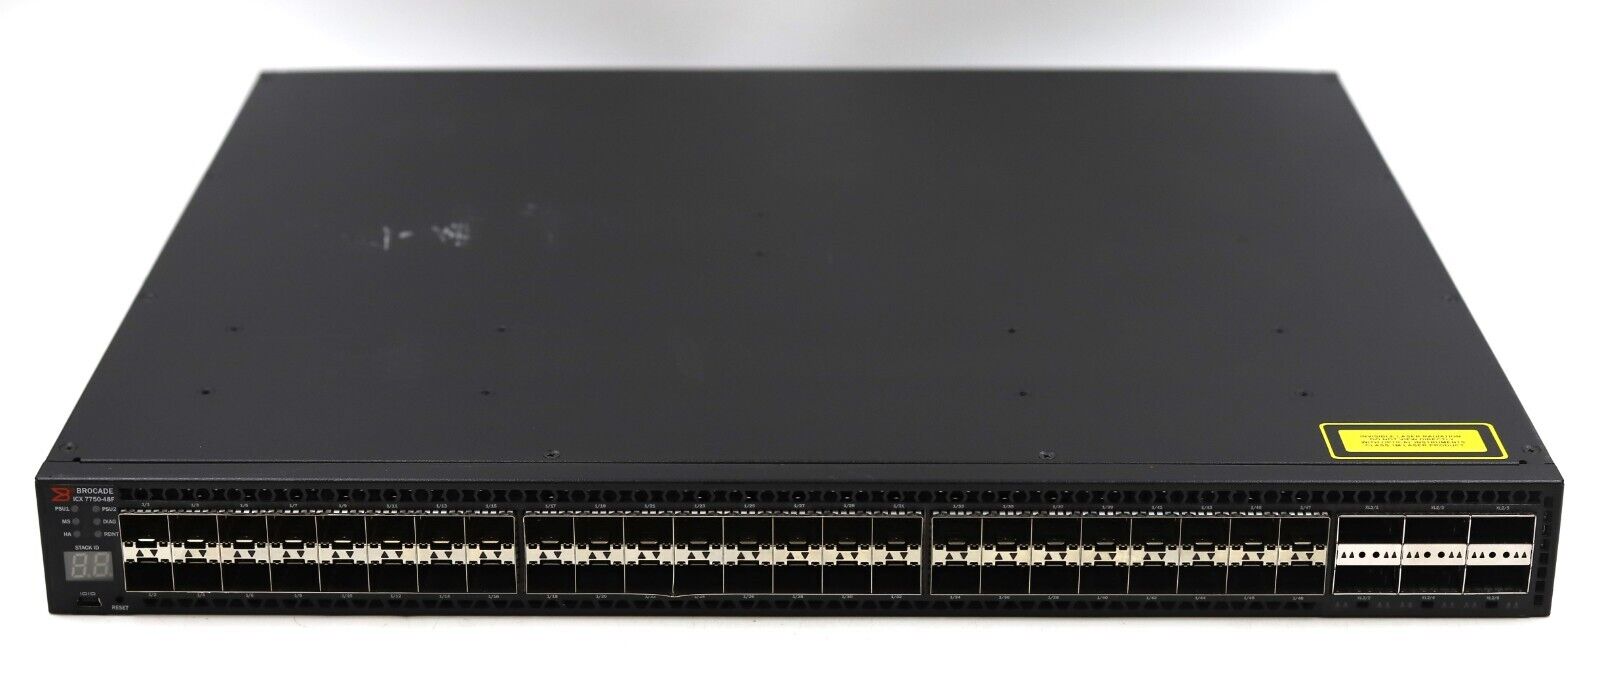 Brocade ICX 7750 48-Port 10GbE SFP+ 6x40GbE QSFP+ Network Switch P/N:ICX7750-48F